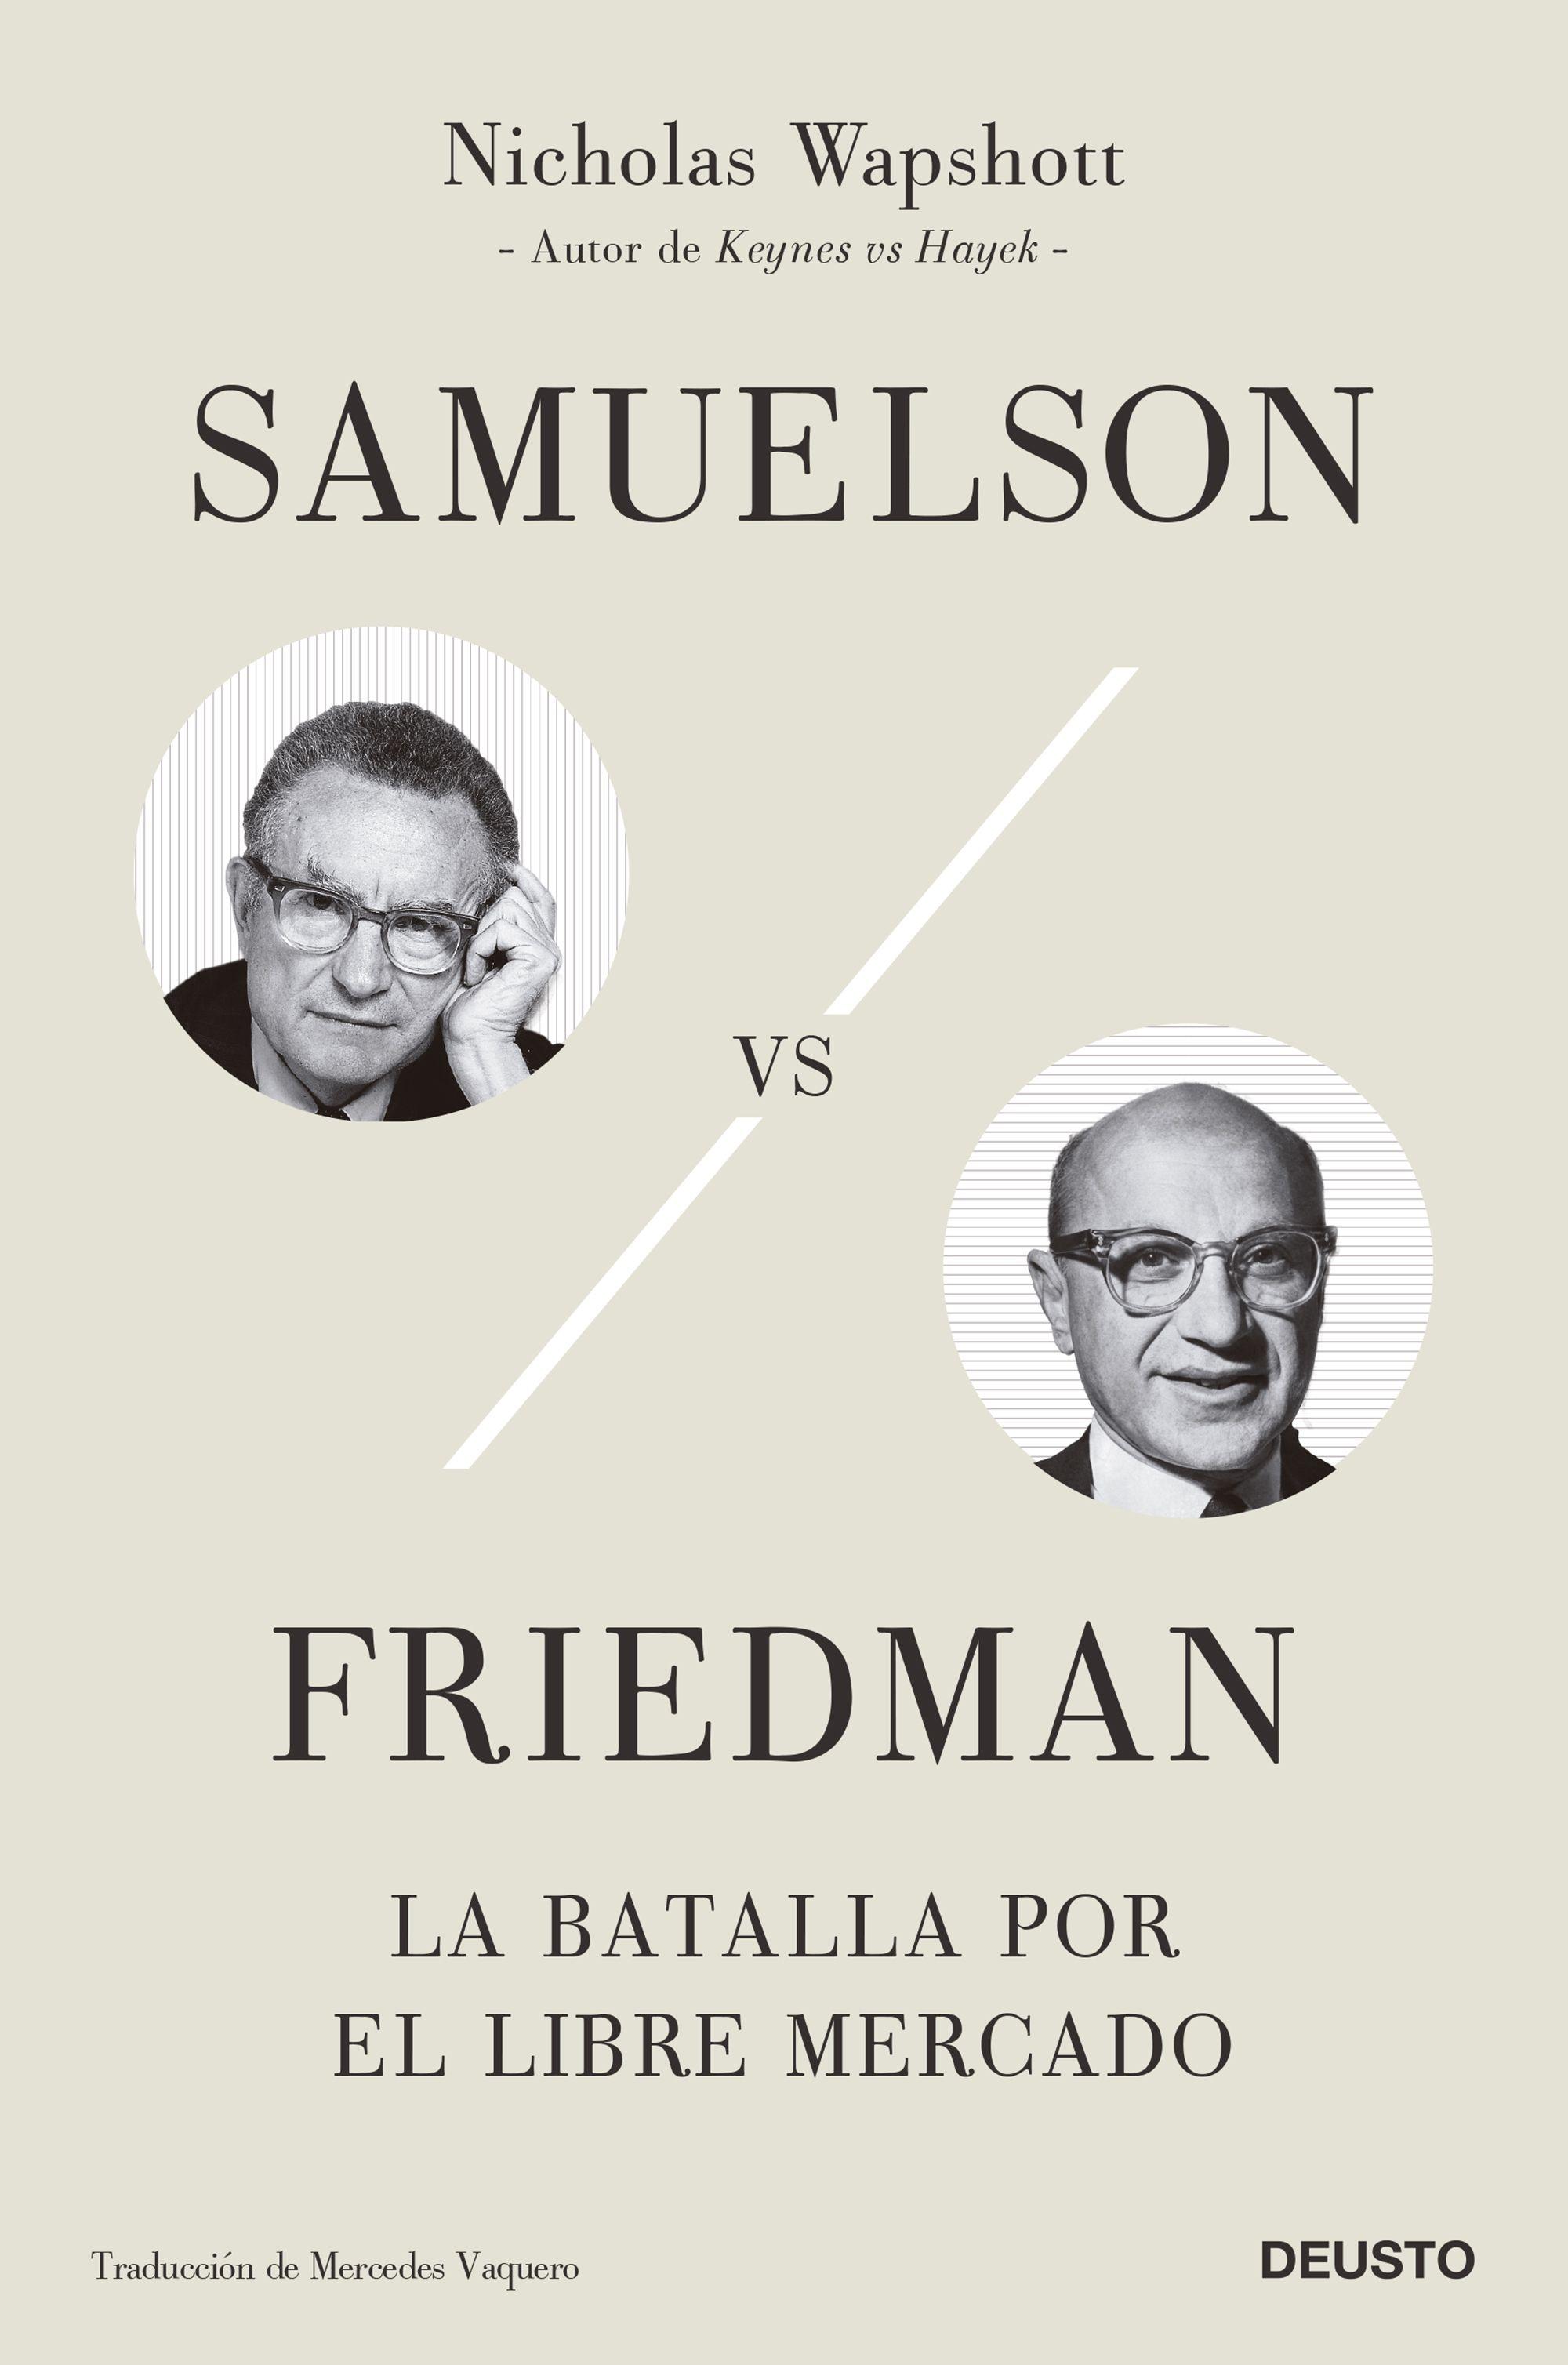 Samuelson Vs Friedman "La Batalla por el Libre Mercado". 